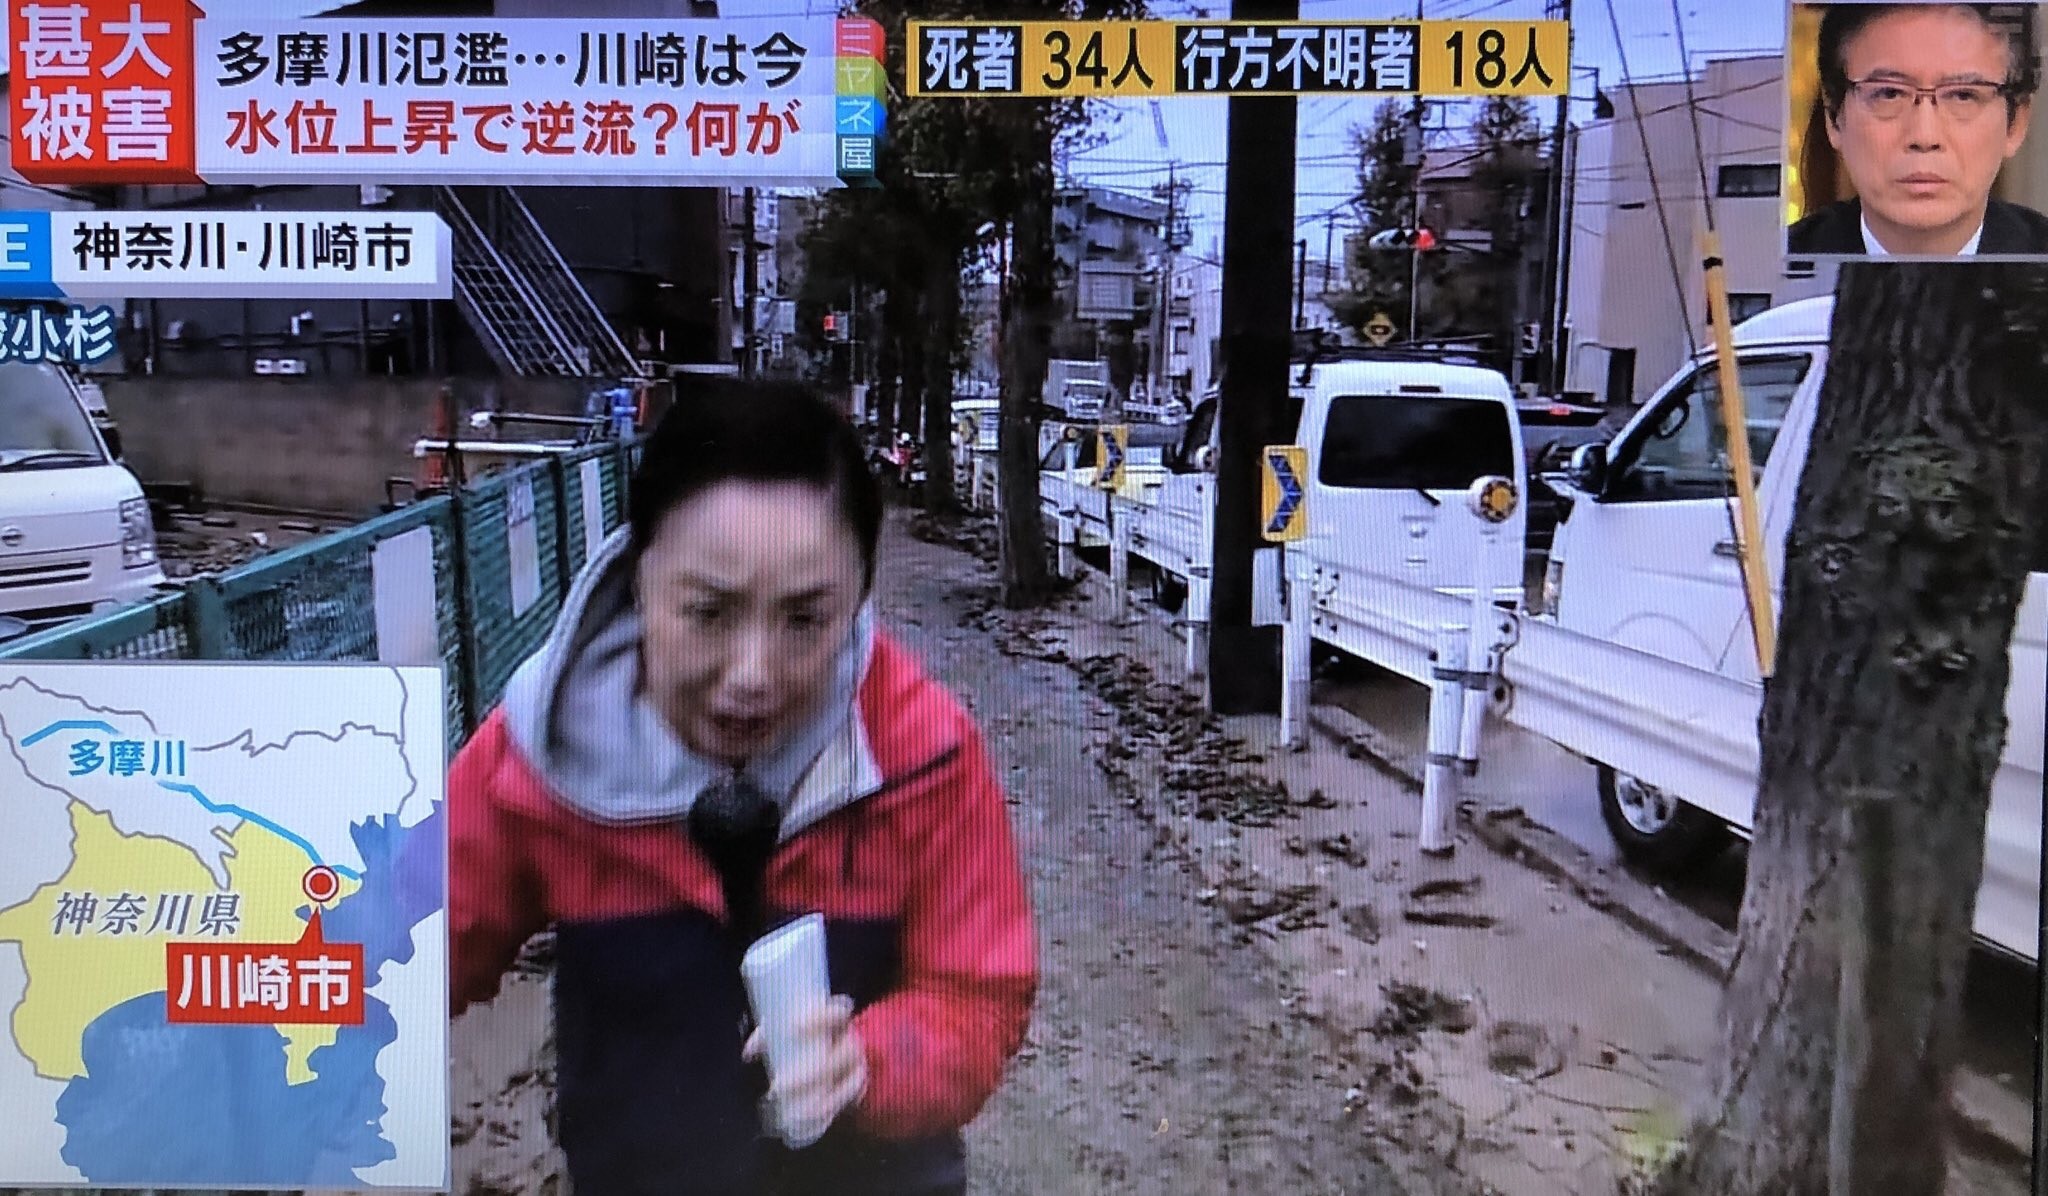 [Sad news] Musashi Kosugi reports that sewage is declared backflow